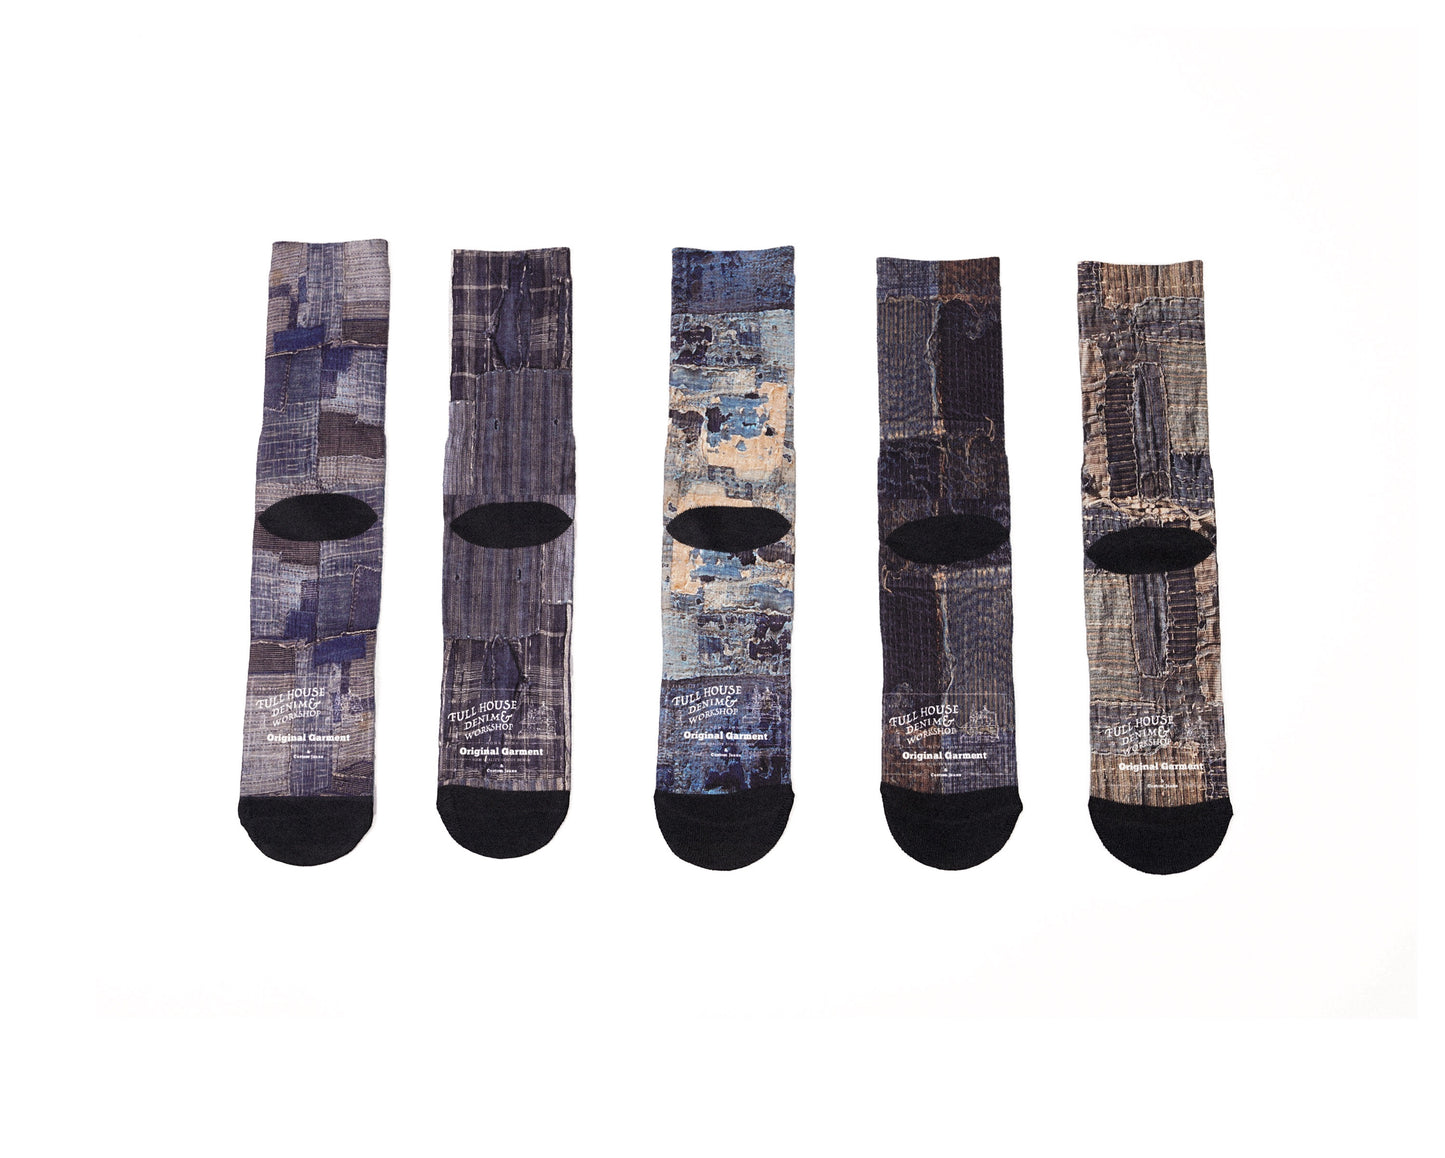 Boro & Sashiko Digital Print Socks